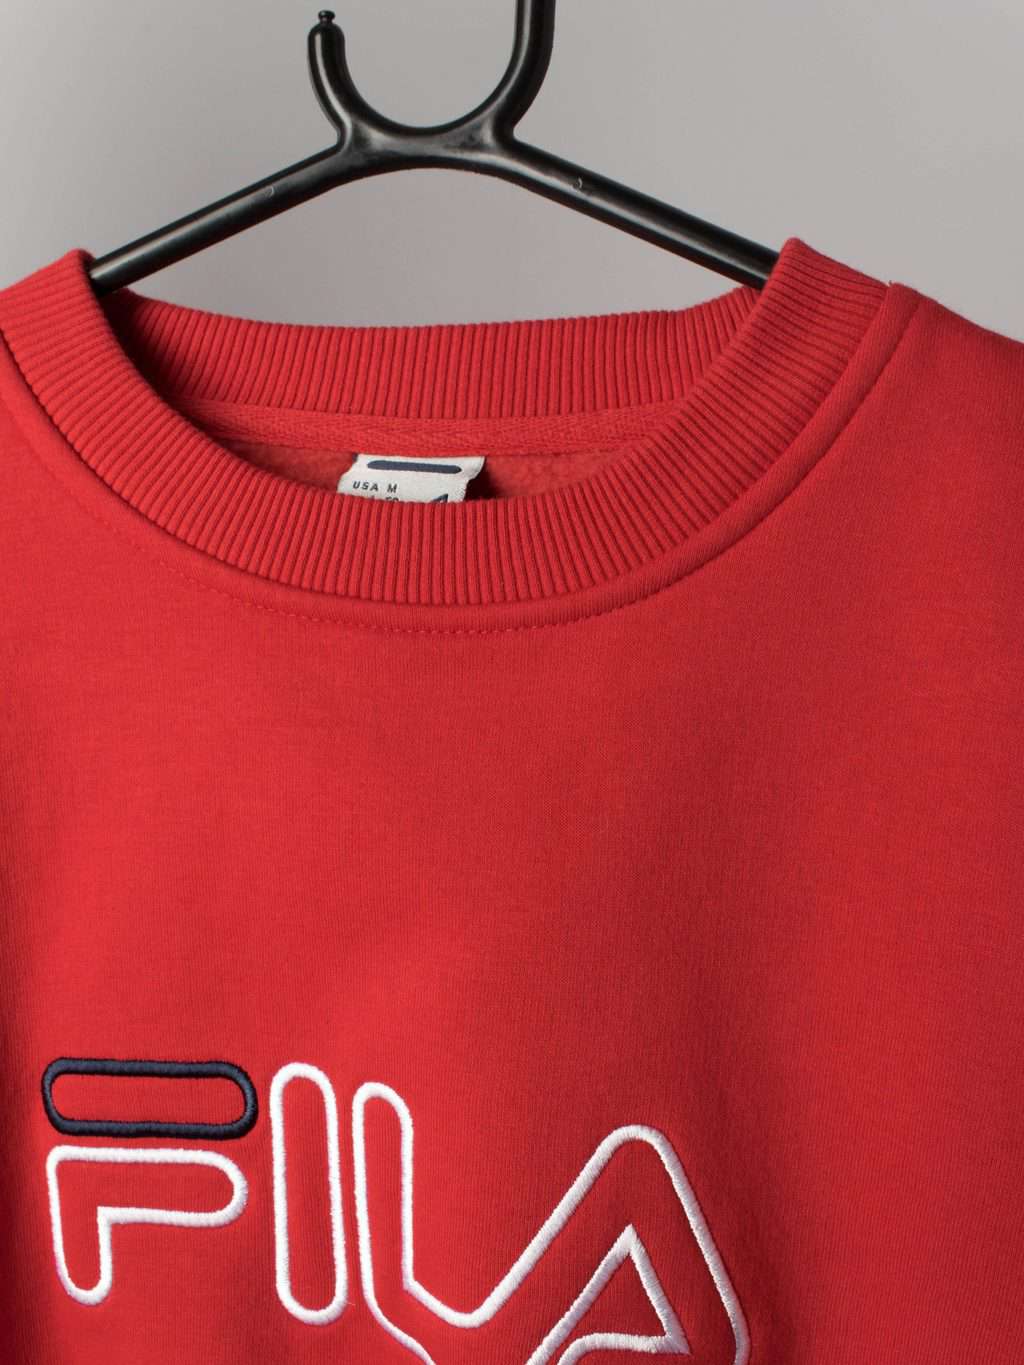 Vintage Fila Sweatshirt Bright Red 90s Y2k Spellout Logo - Small / Medium